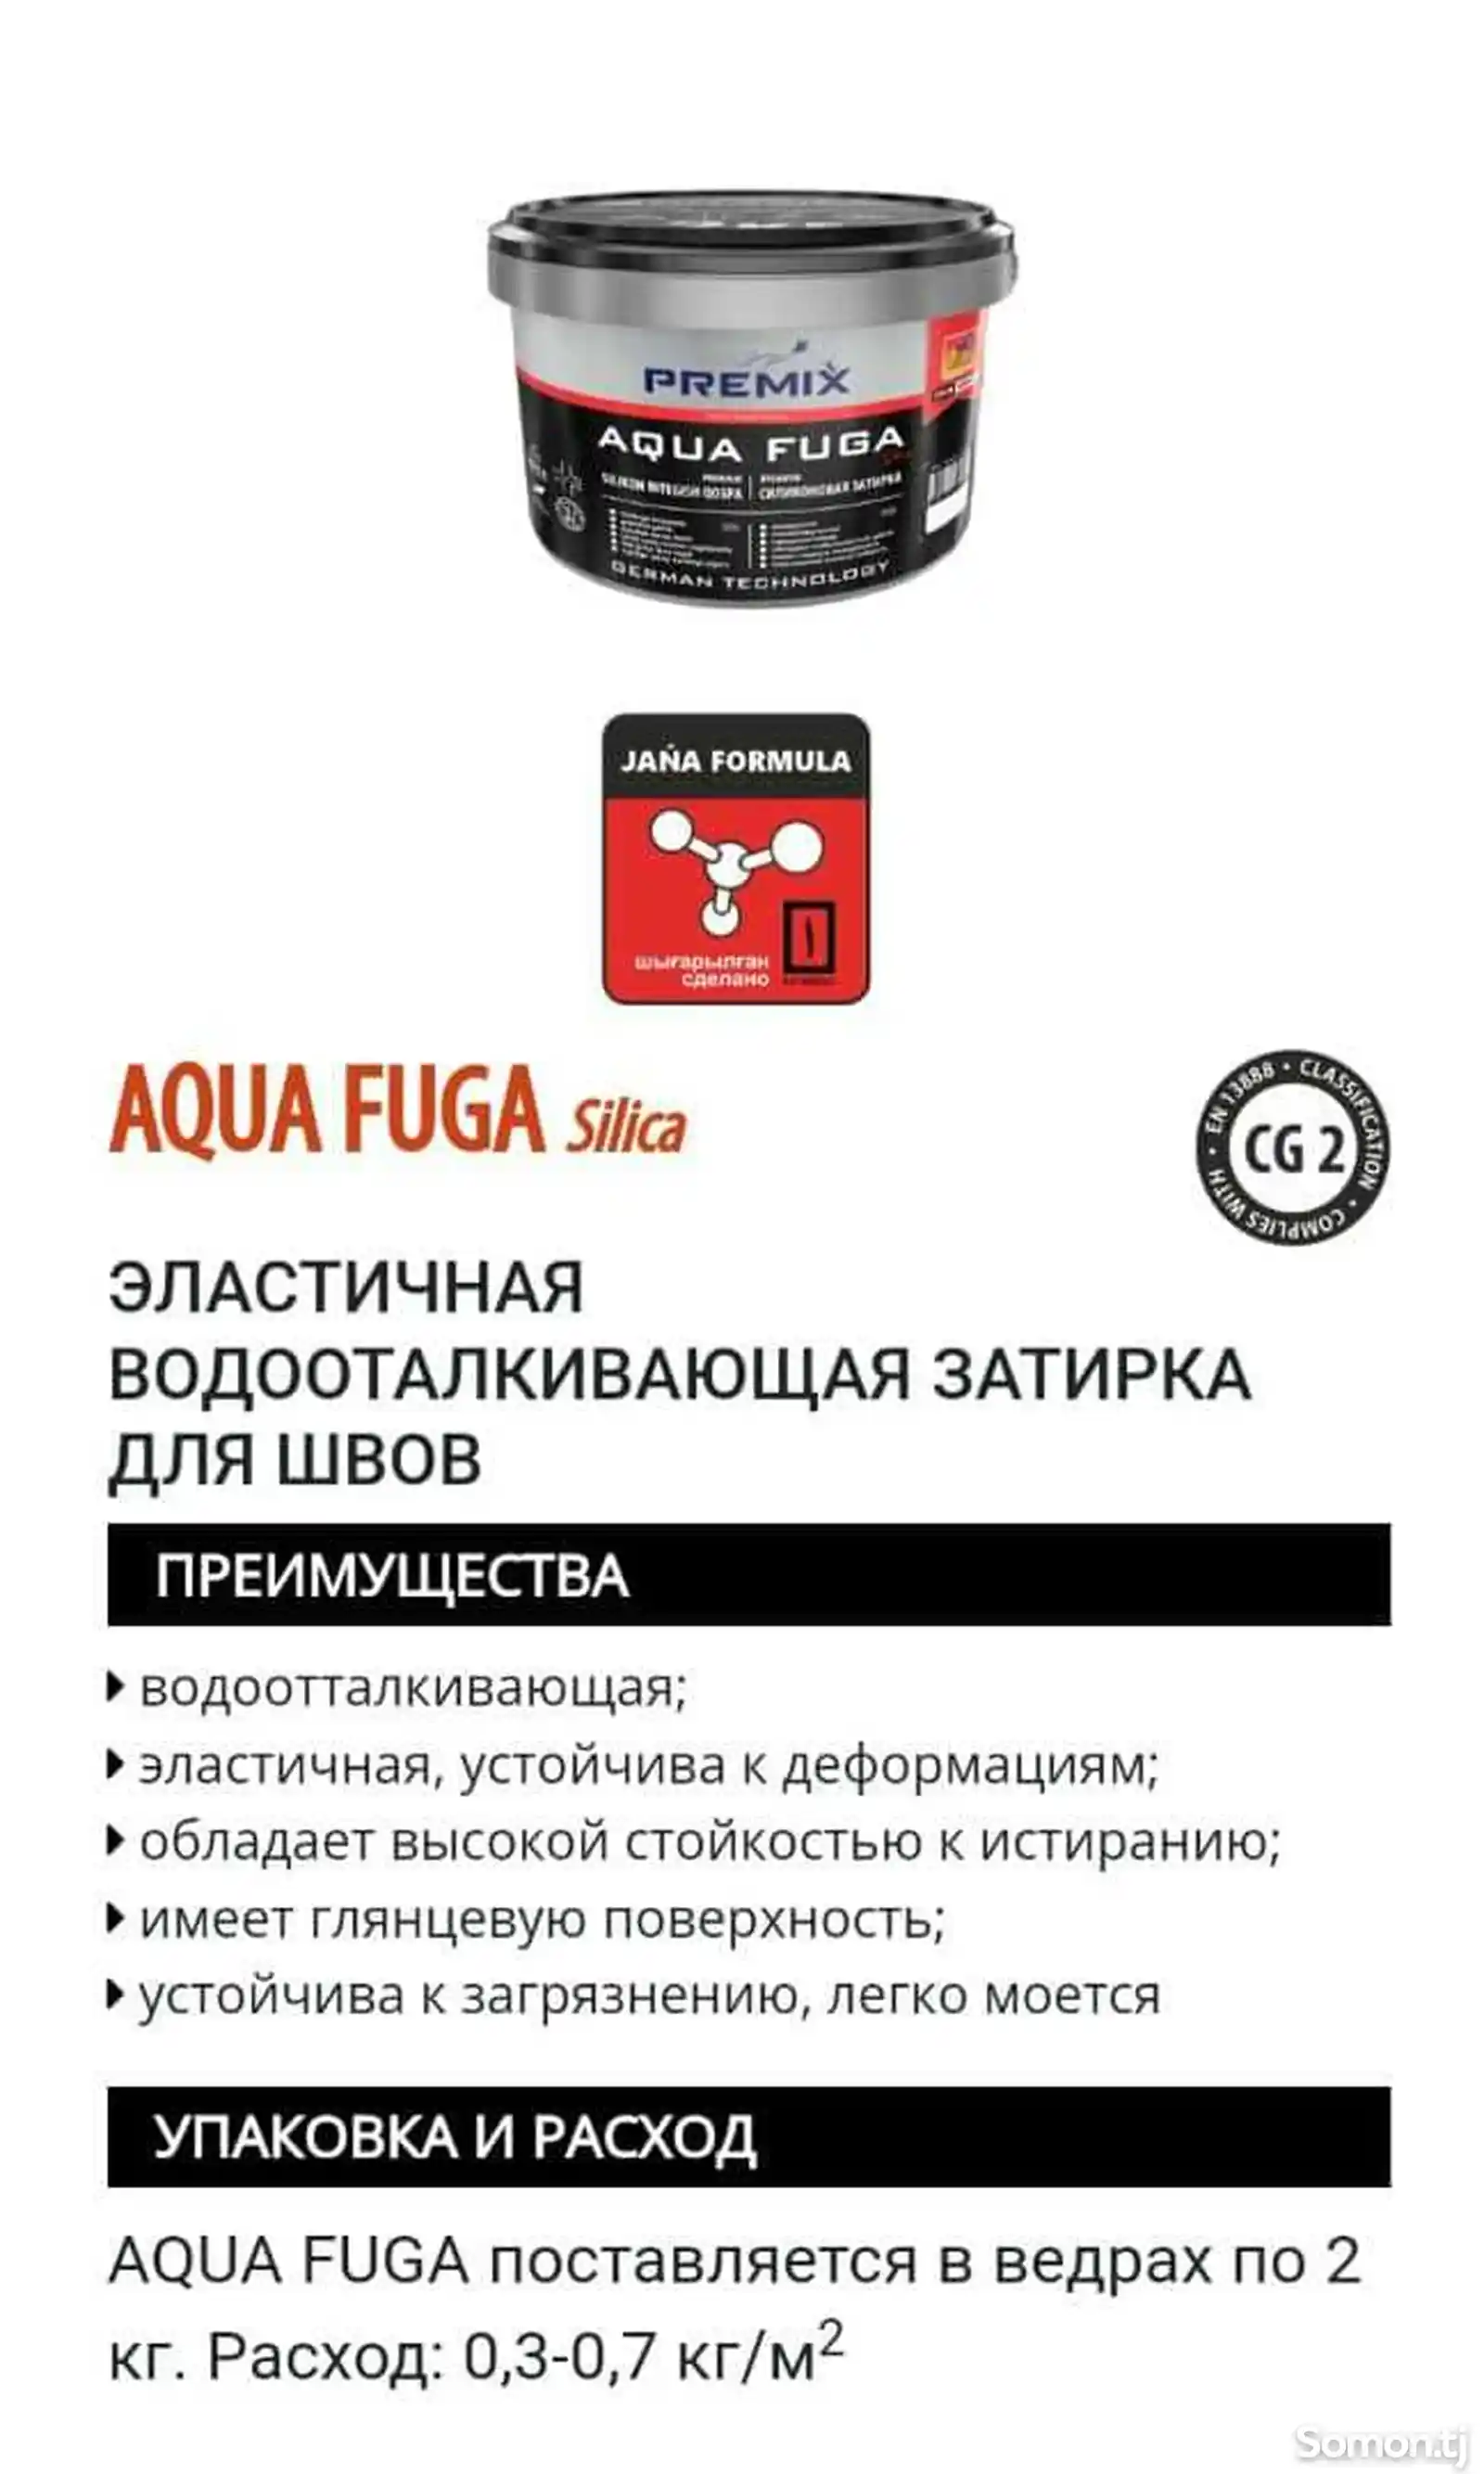 Затирка для швов Aqua Fuga, Вес 2кг, на заказ